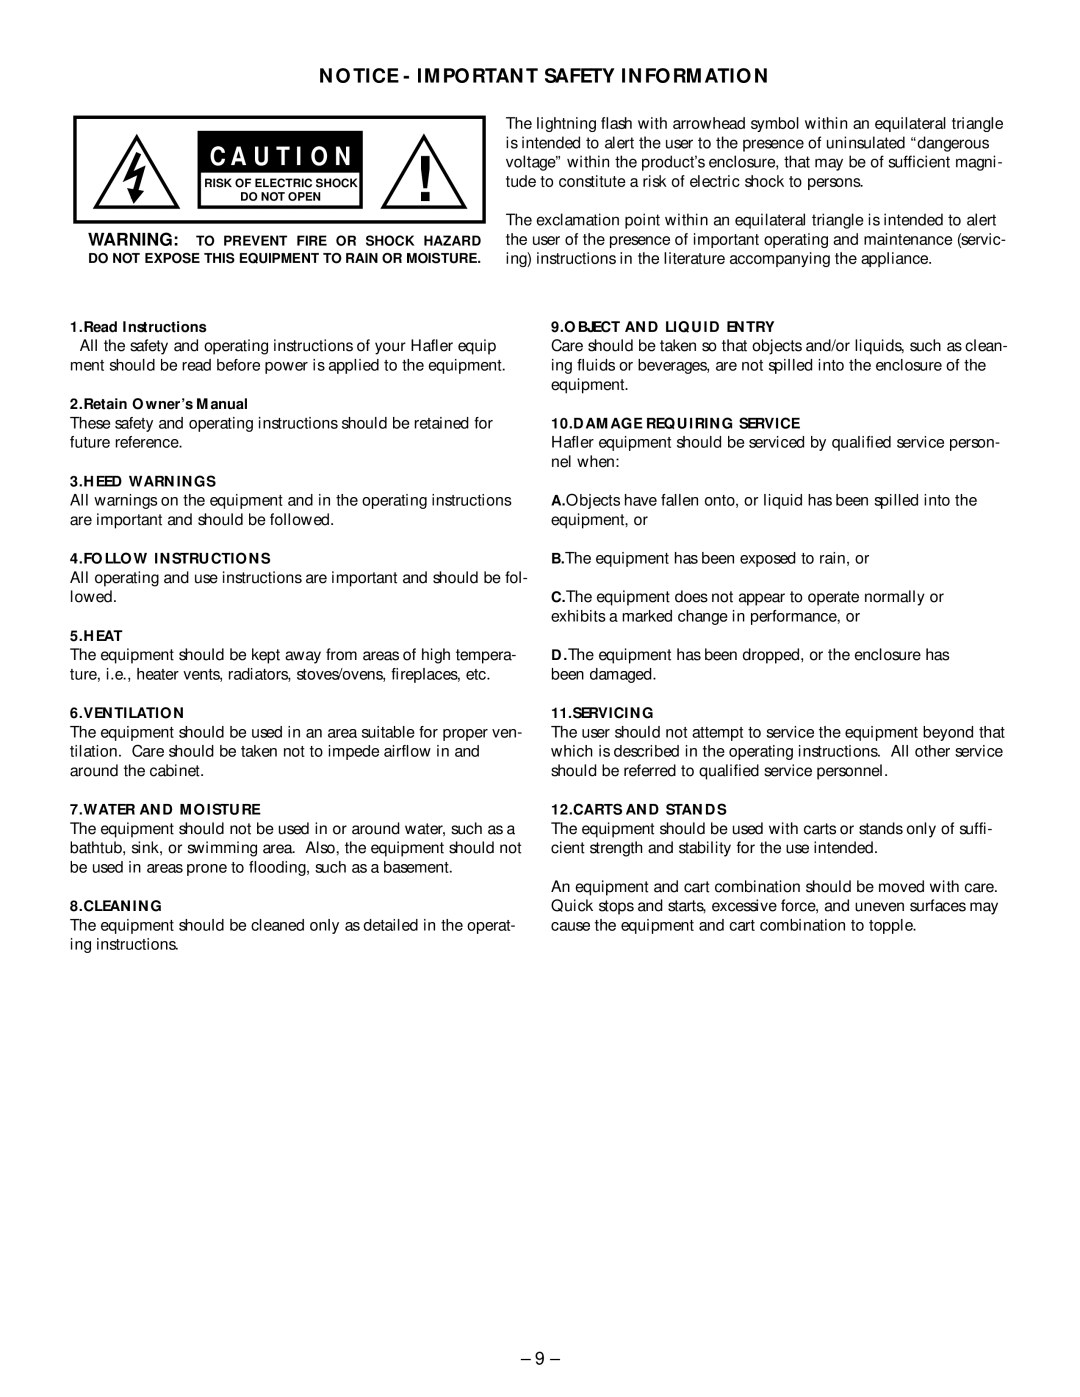 Hafler M5 manual C A U T I O N, Notice - Important Safety Information 